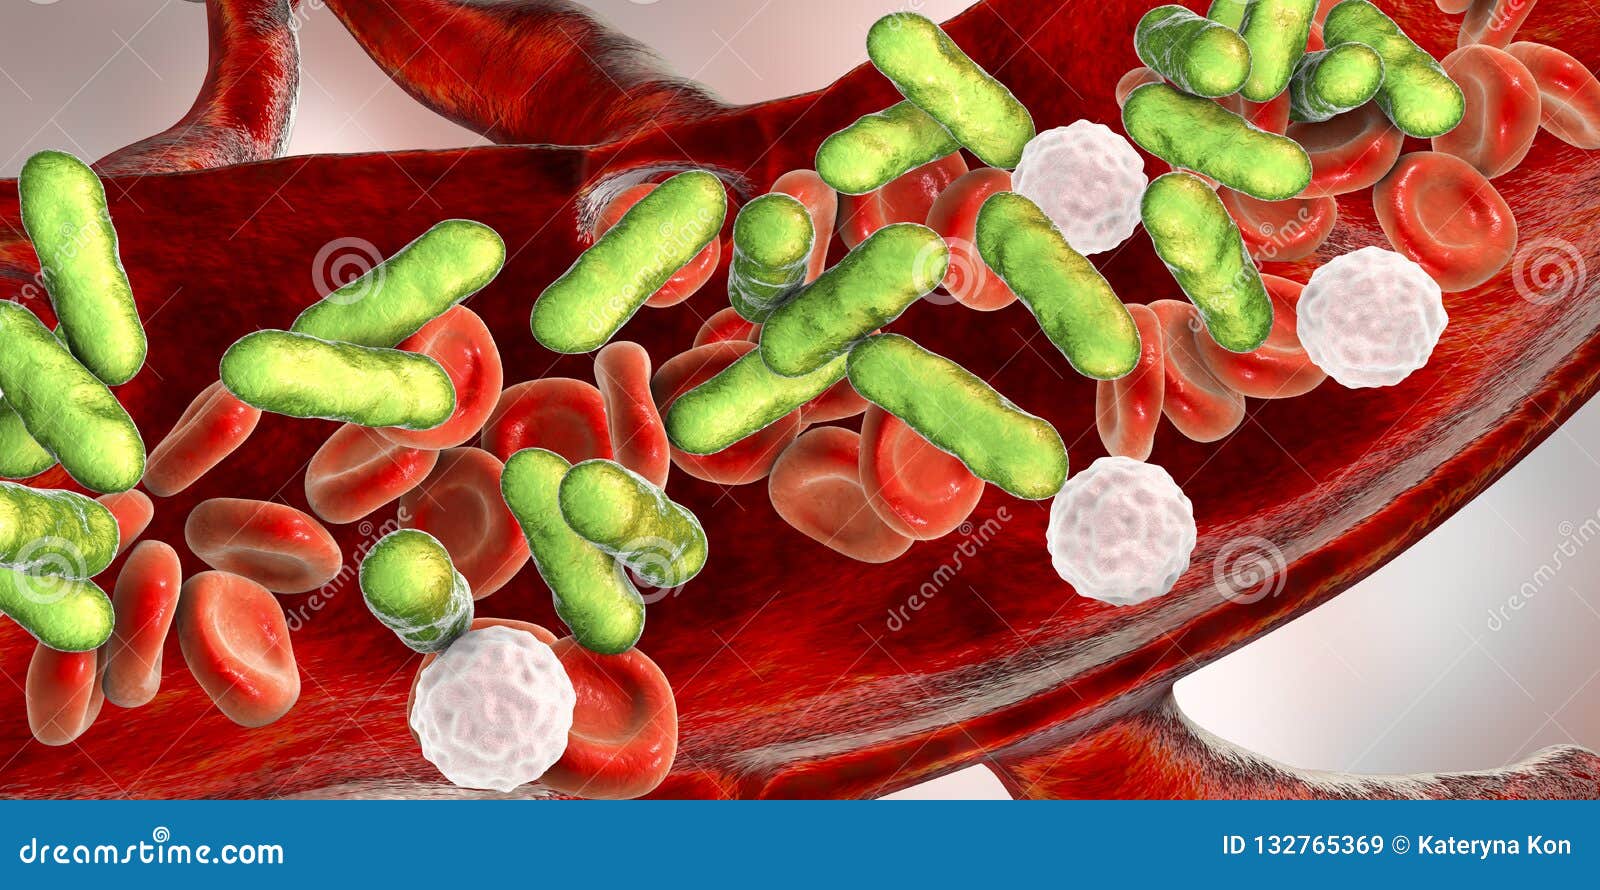 sepsis, bacteria in blood